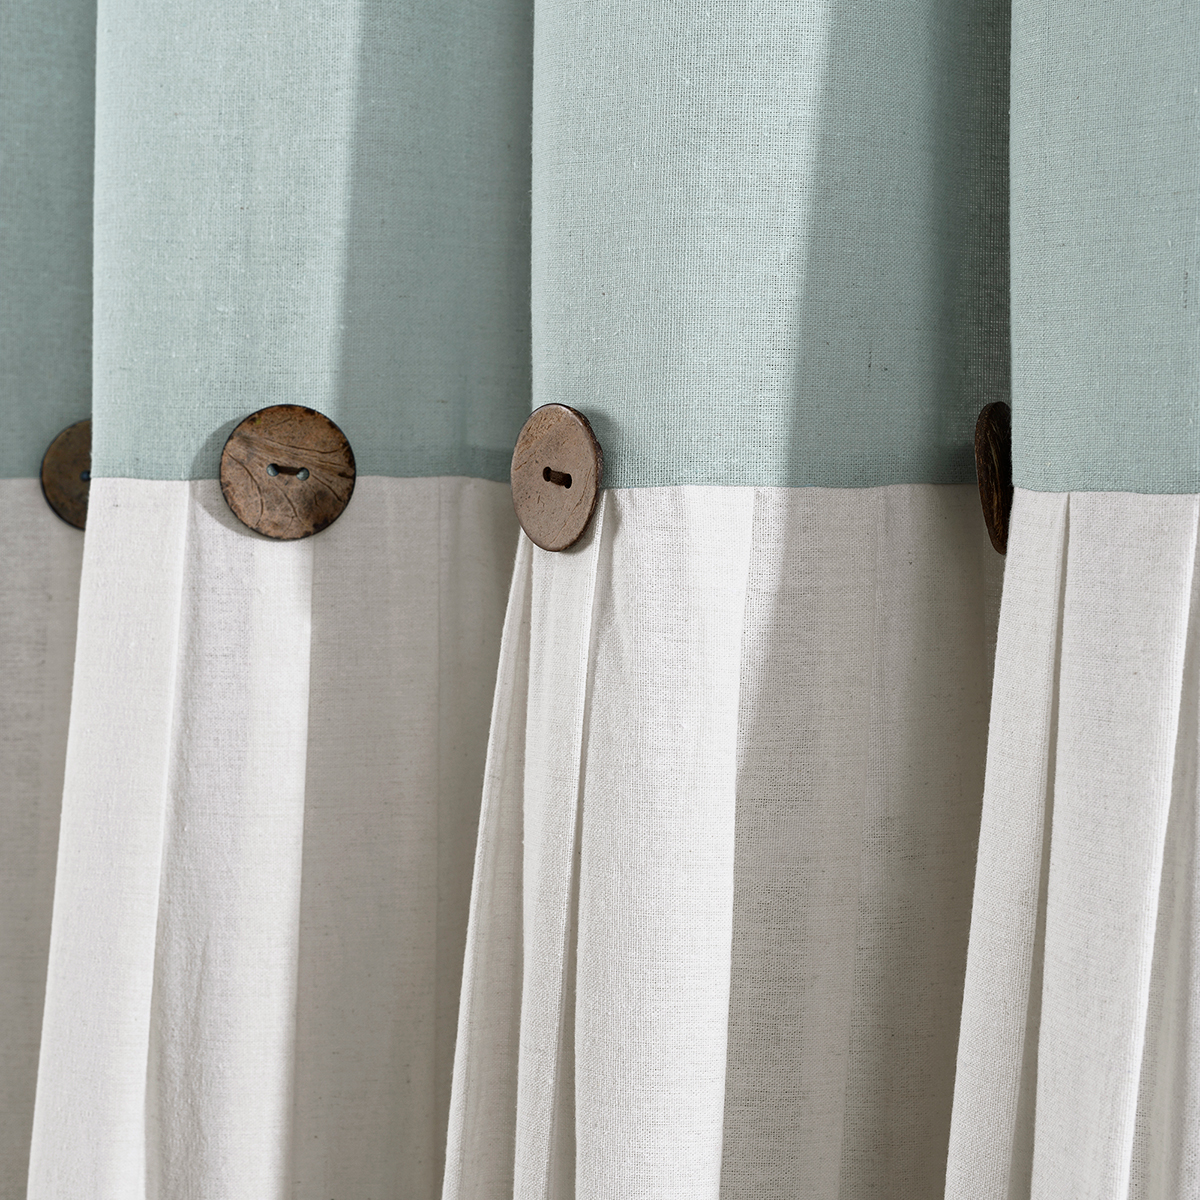 Lush Decor(R) Linen Button Shower Curtain